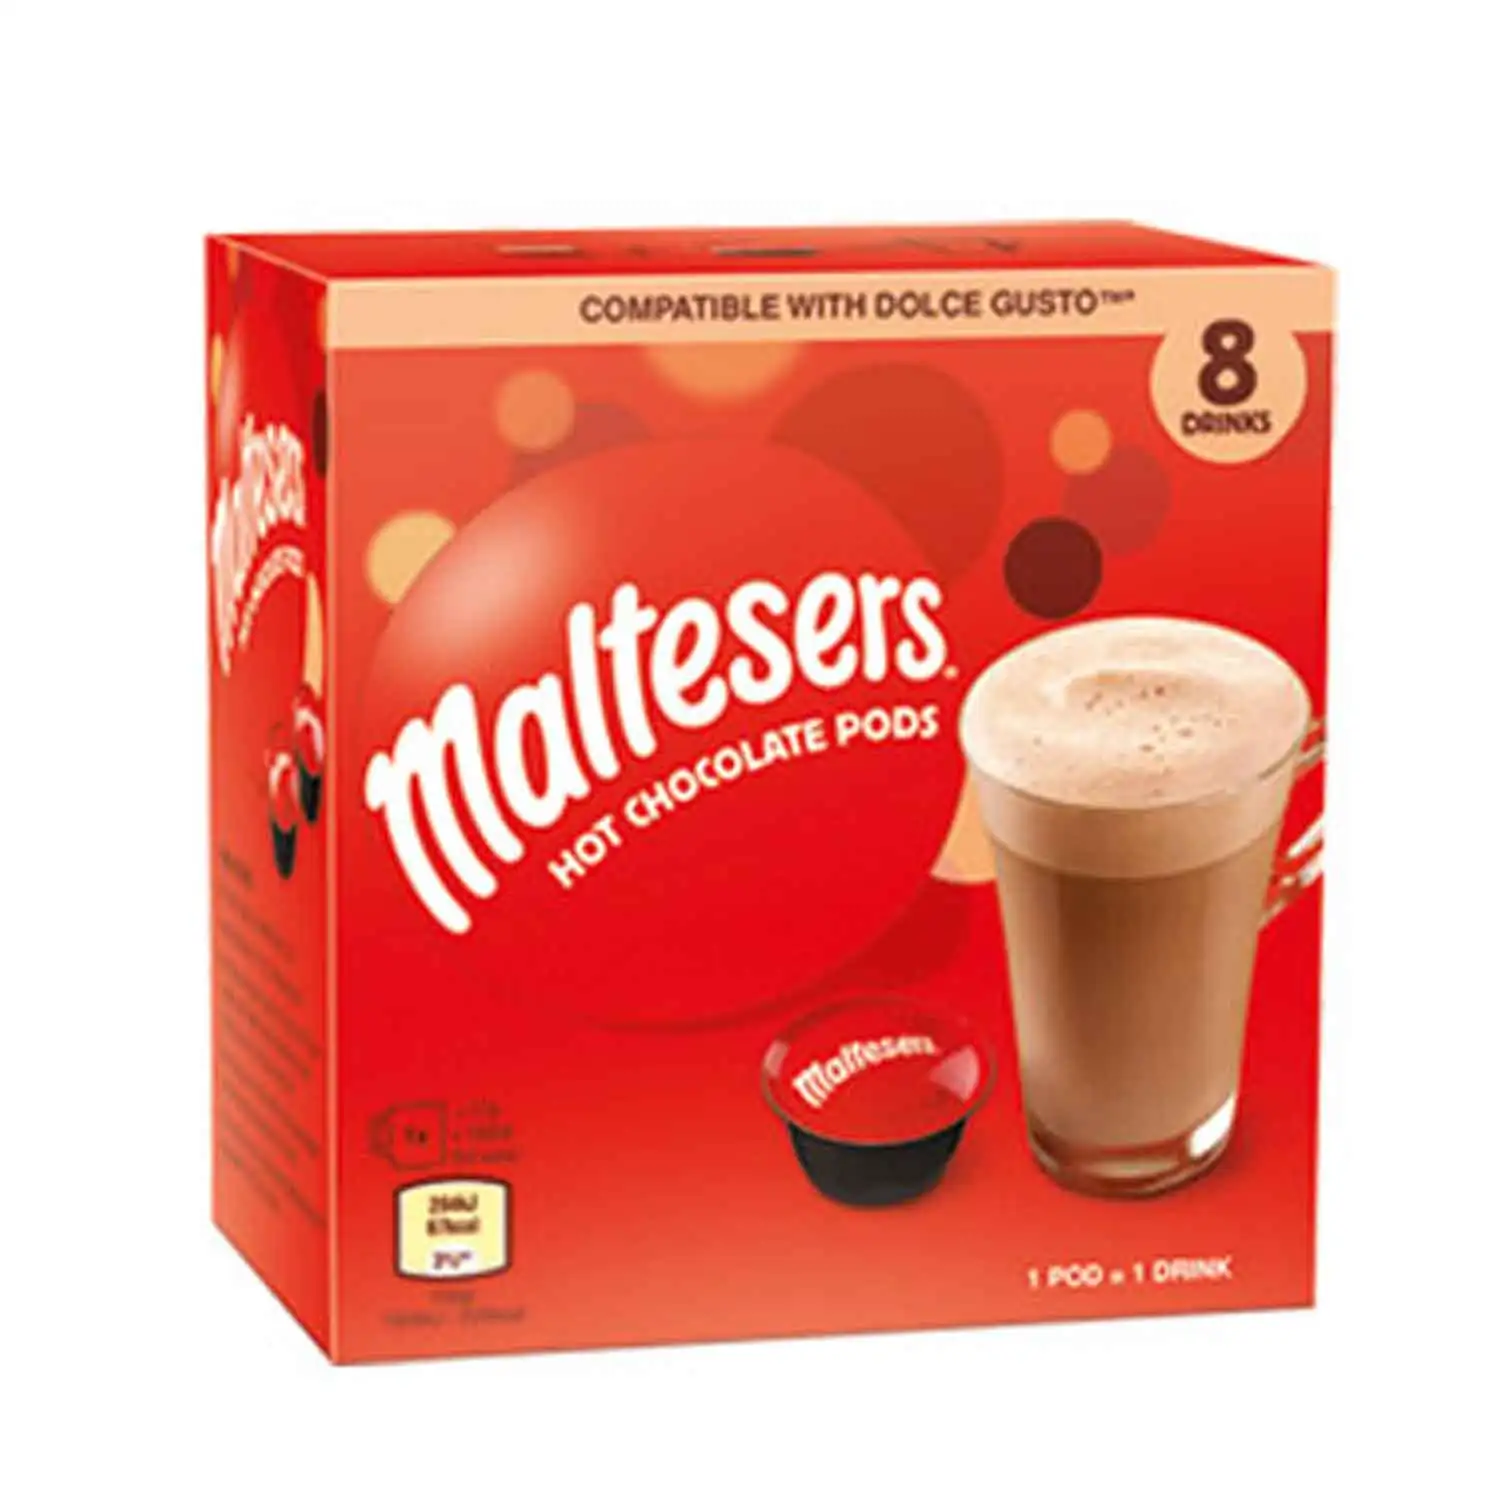 Maltesers chocolat chaud pods 8x17g